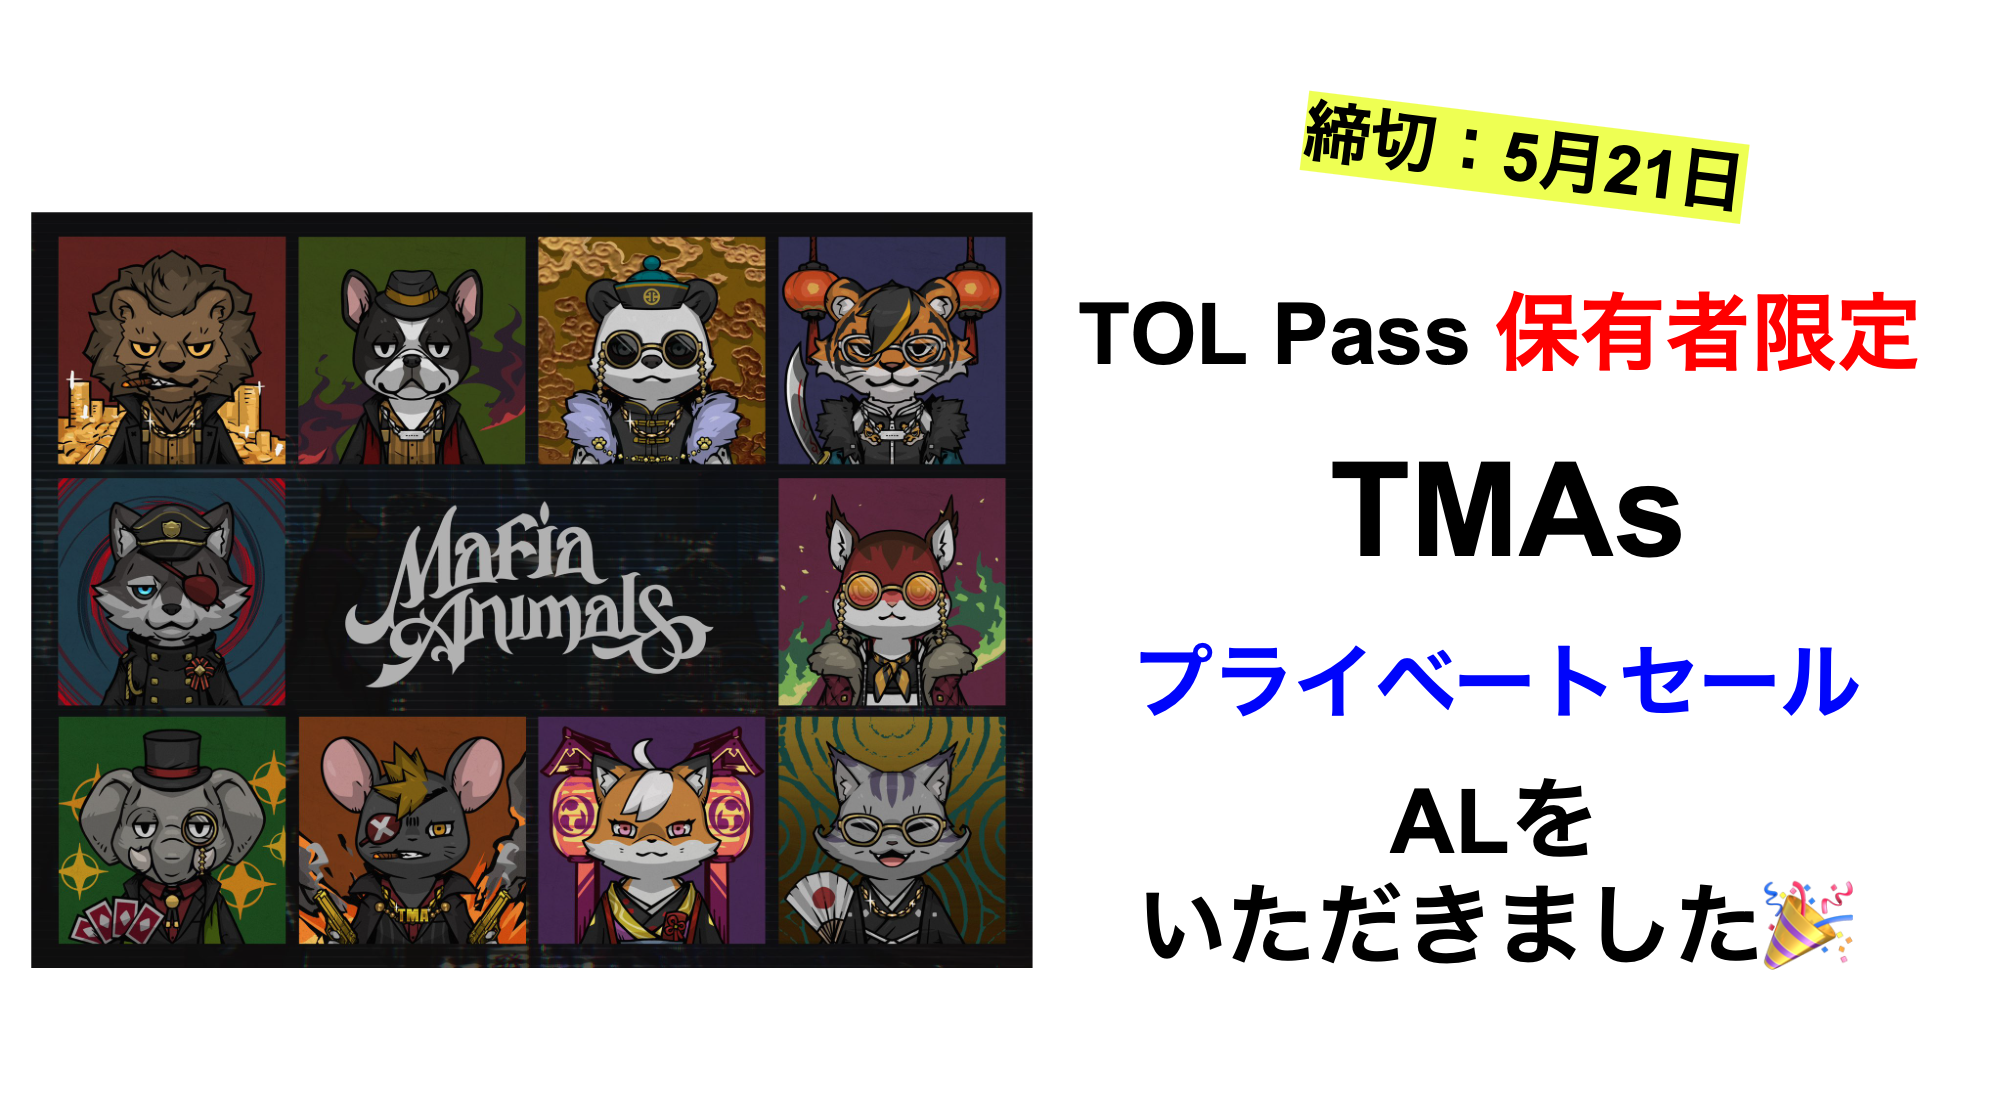 tmas 1st sale tolpass